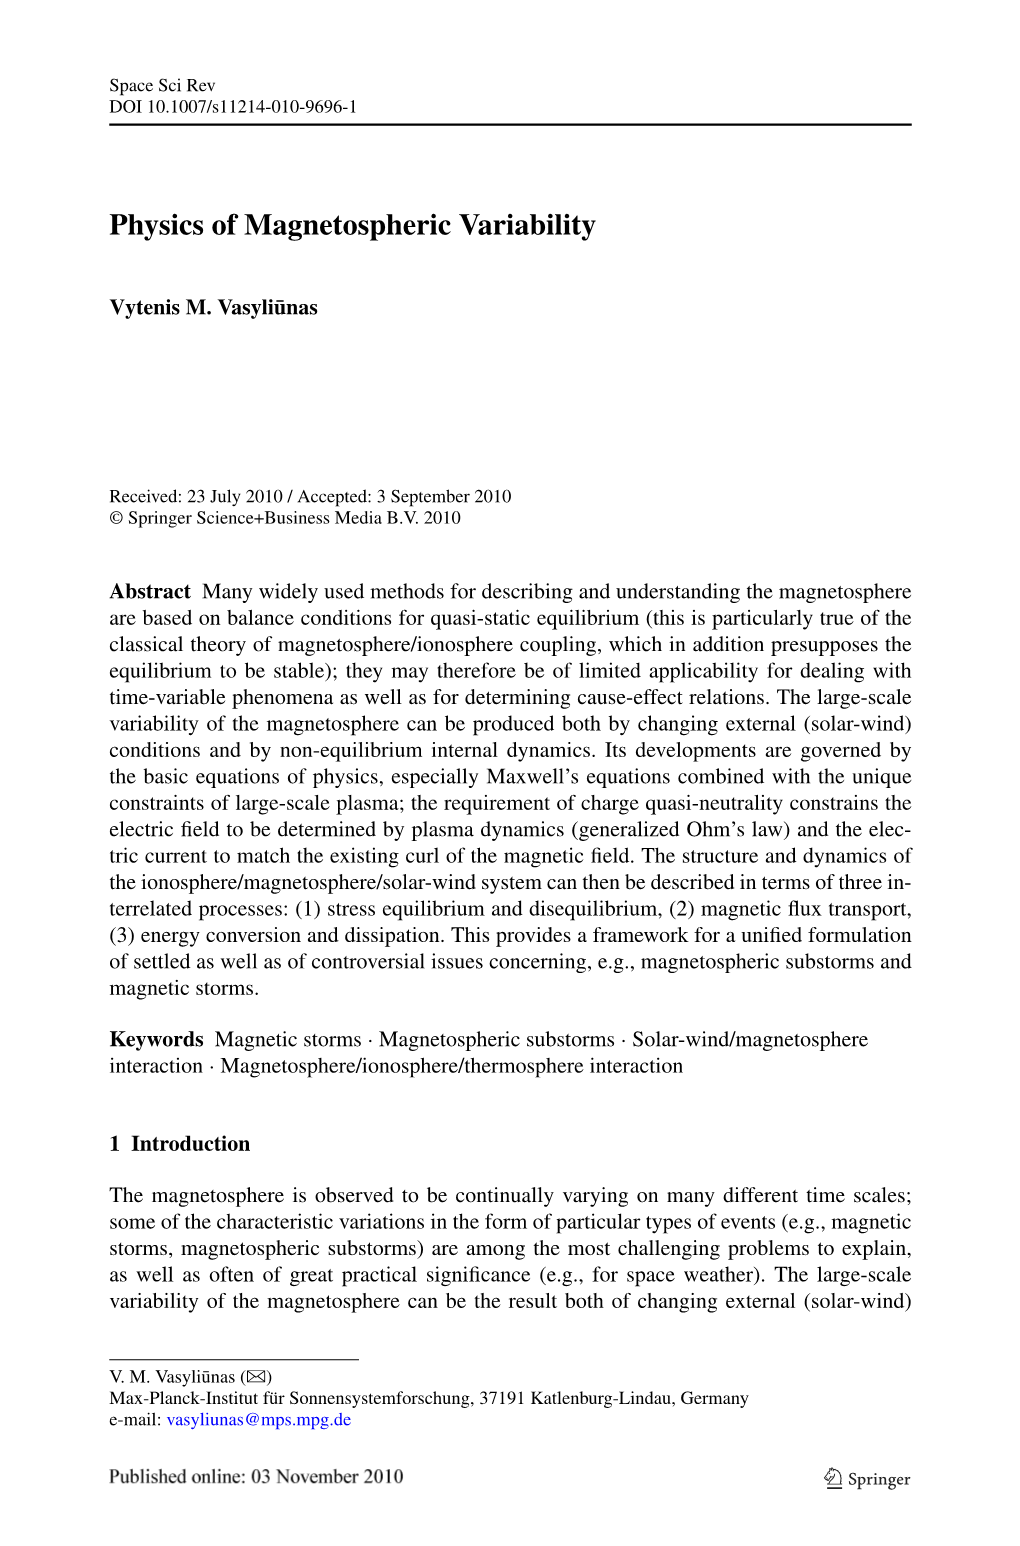 Physics of Magnetospheric Variability